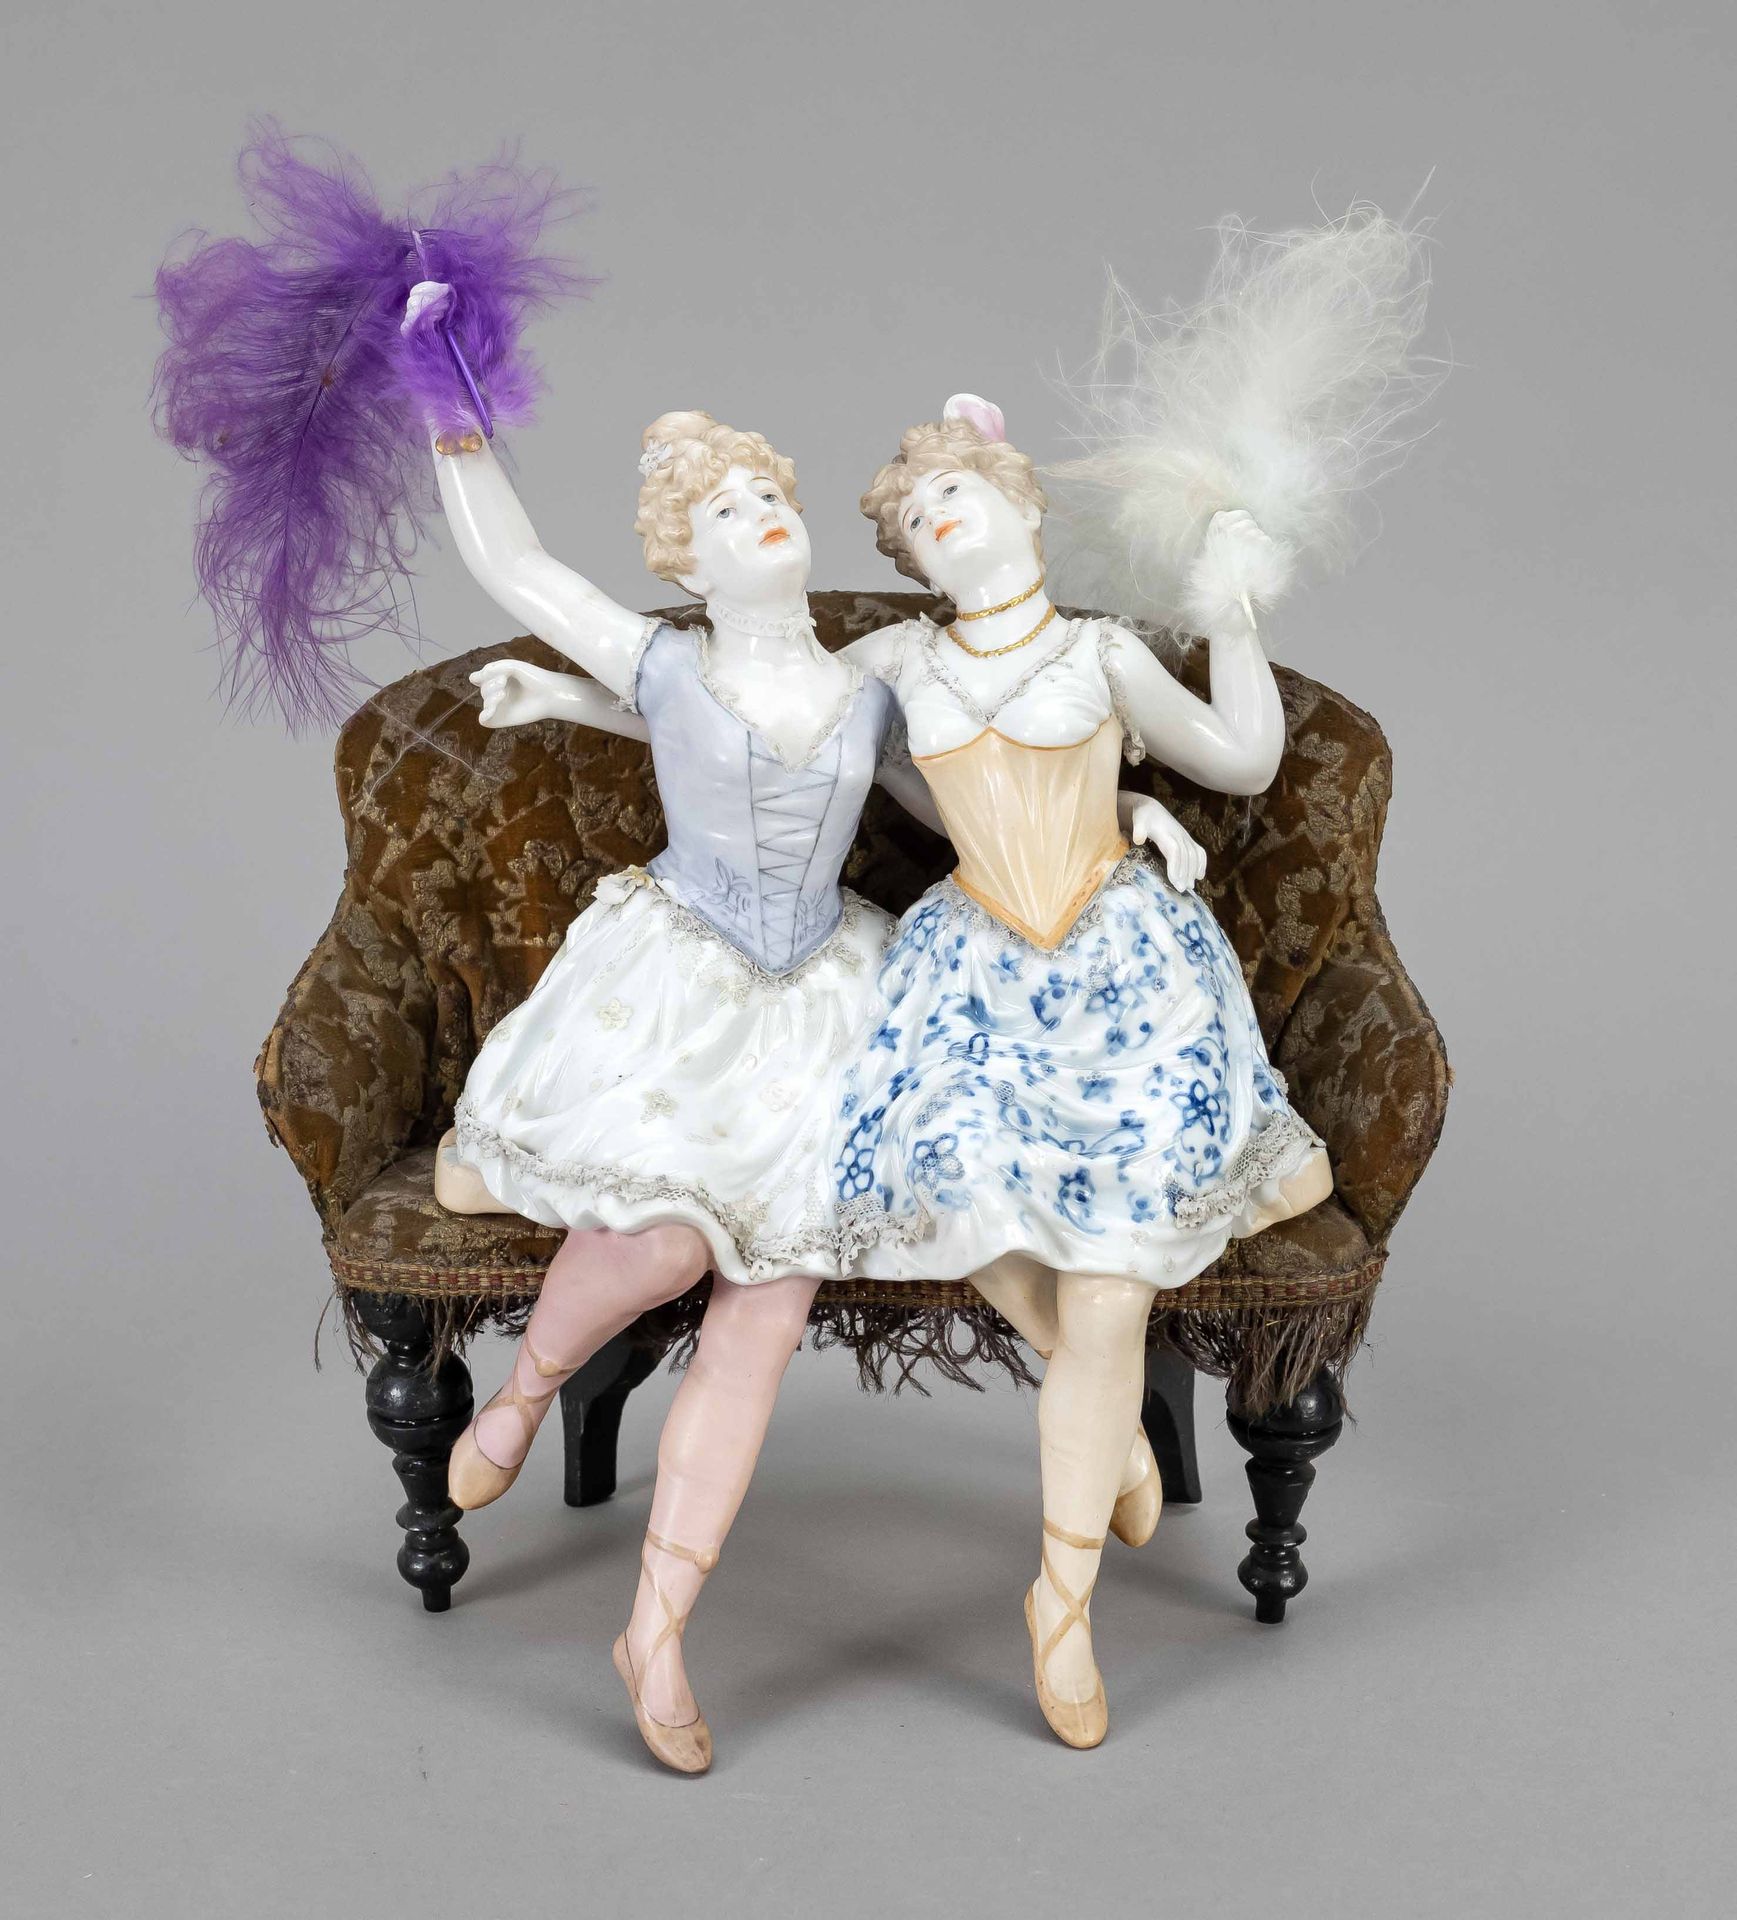 Null 沙发上的两个舞者，约1900年，瓷器人物，手里拿着羽毛，放在有纺织物盖的木质沙发上，有年代的痕迹，23 x 20 x 10厘米